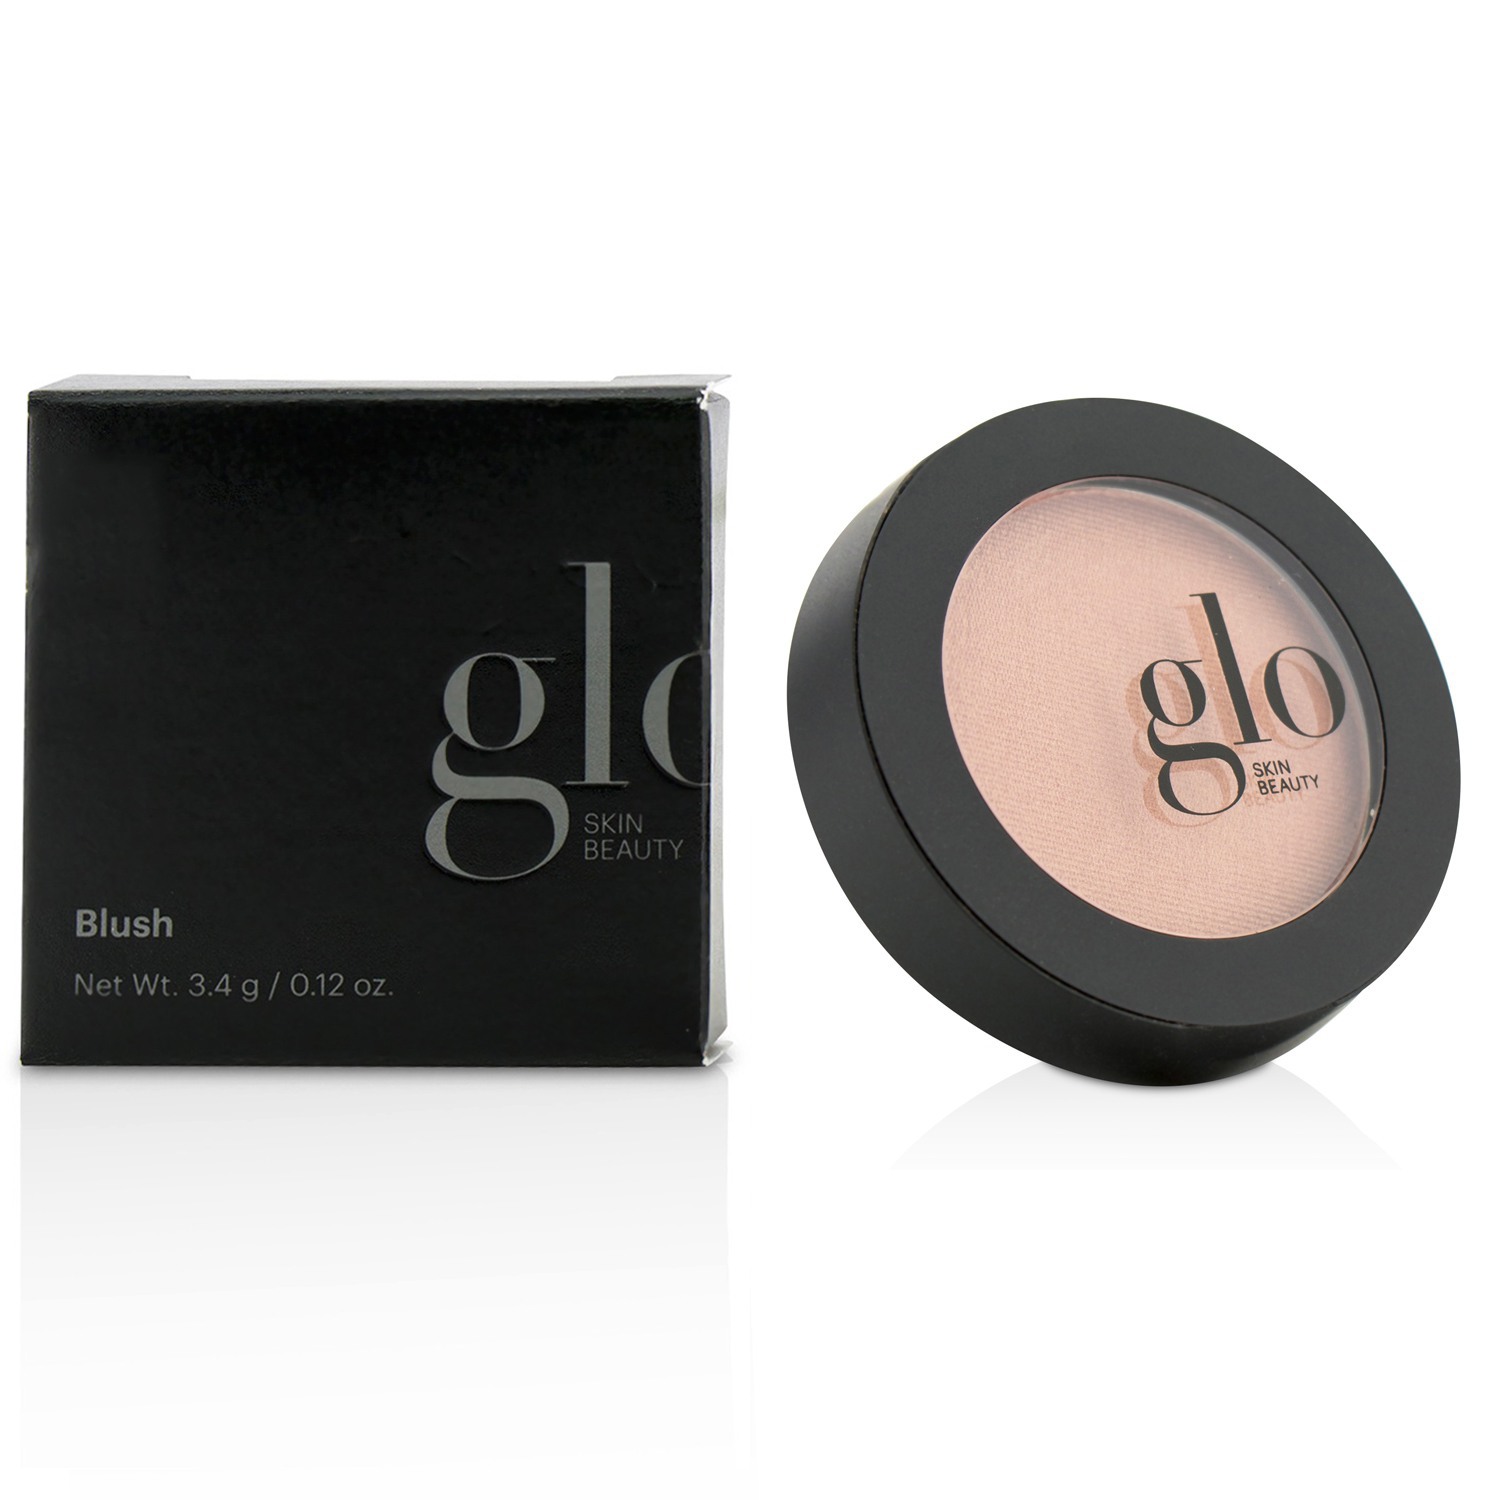 Blush - # Sweet Glo Skin Beauty Image